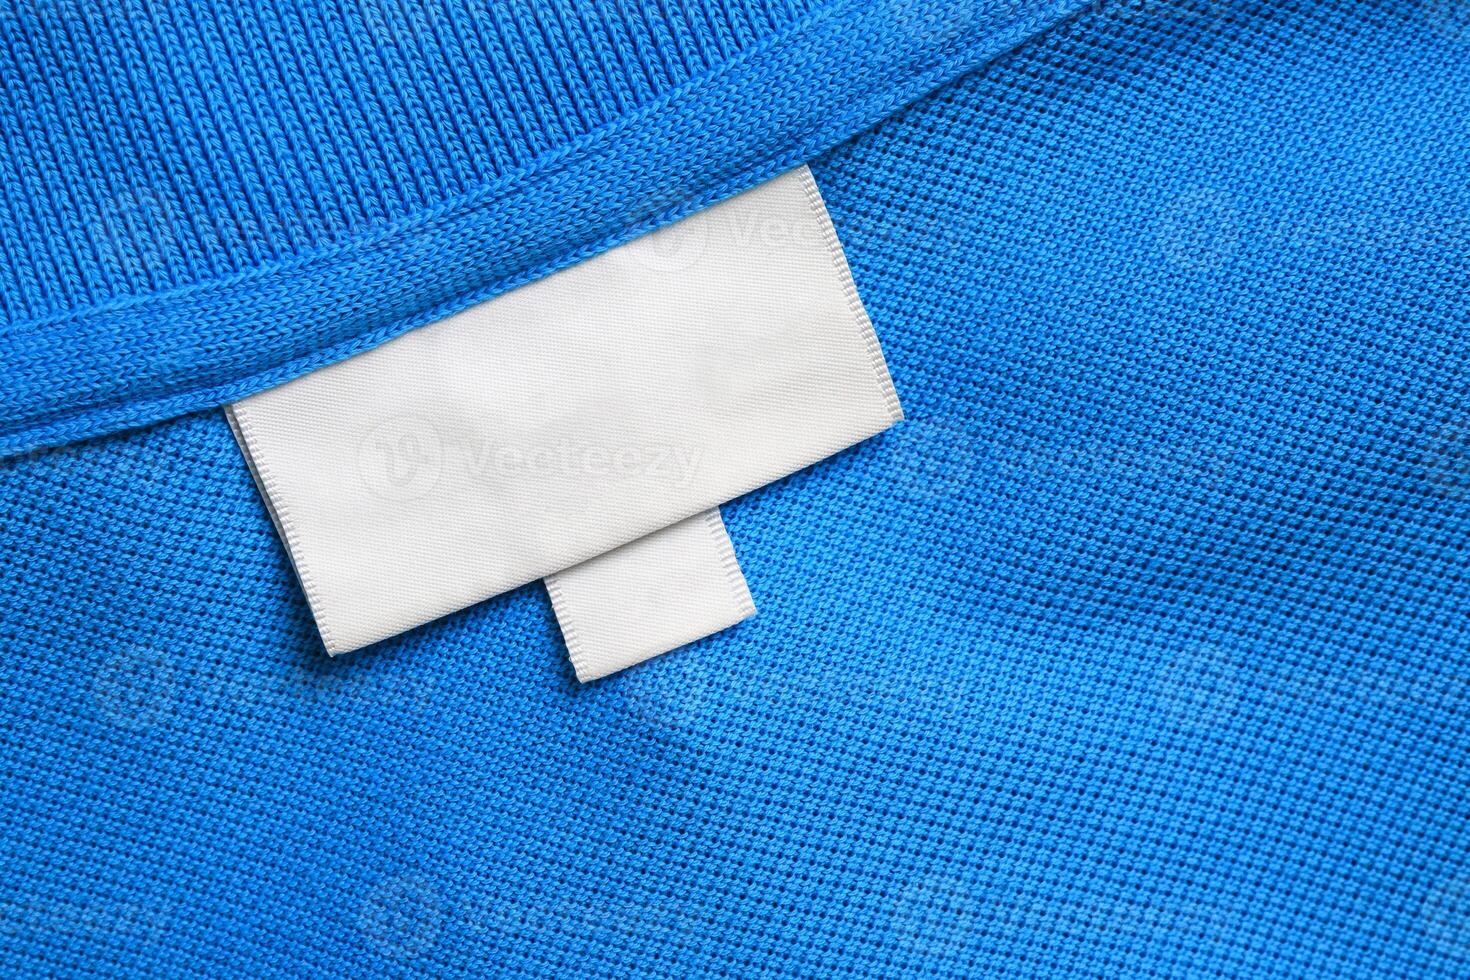 em branco branco lavanderia Cuidado roupas rótulo em azul camisa tecido textura fundo foto